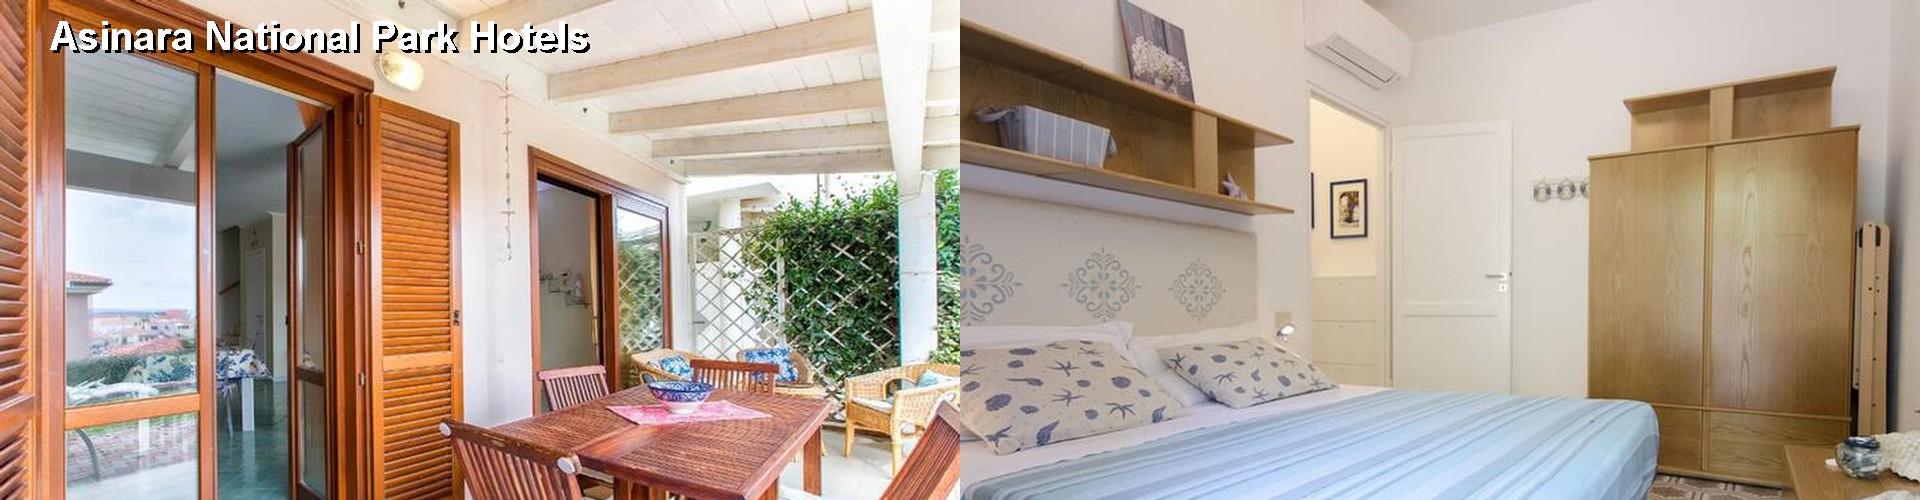 5 Best Hotels near Asinara National Park